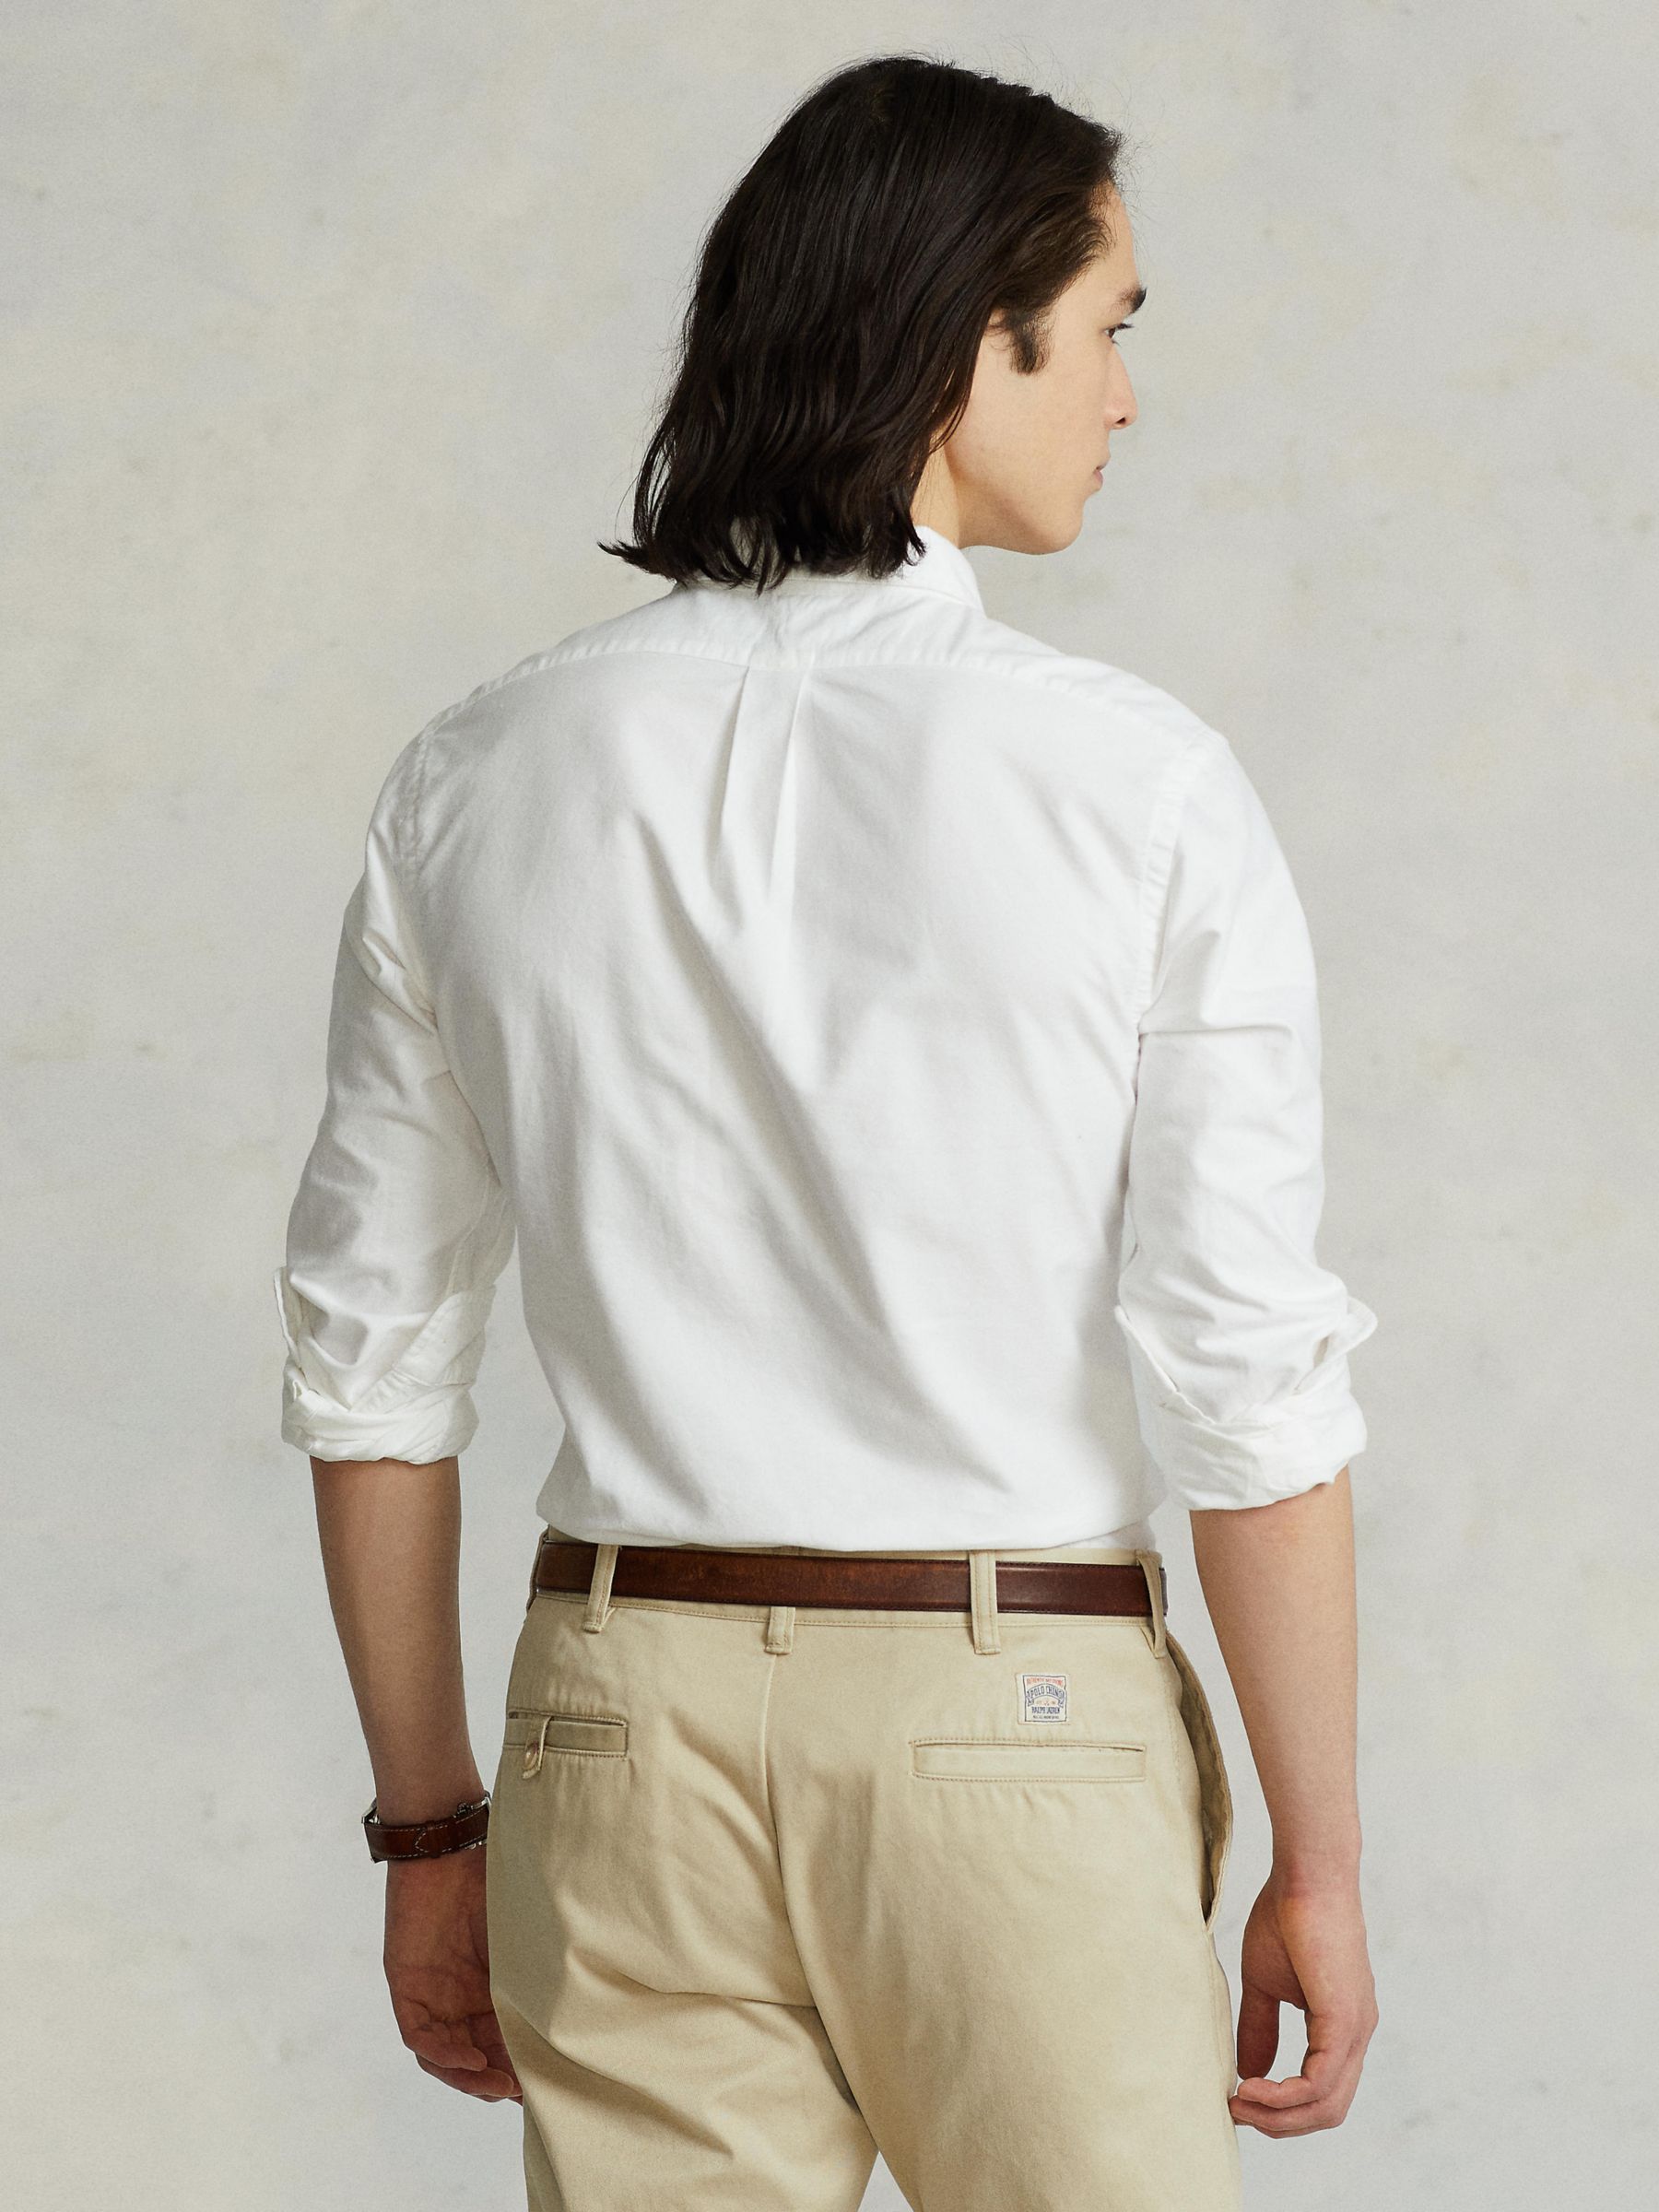 Polo Ralph Lauren Cotton Oxford Slim Fit Shirt, White, M